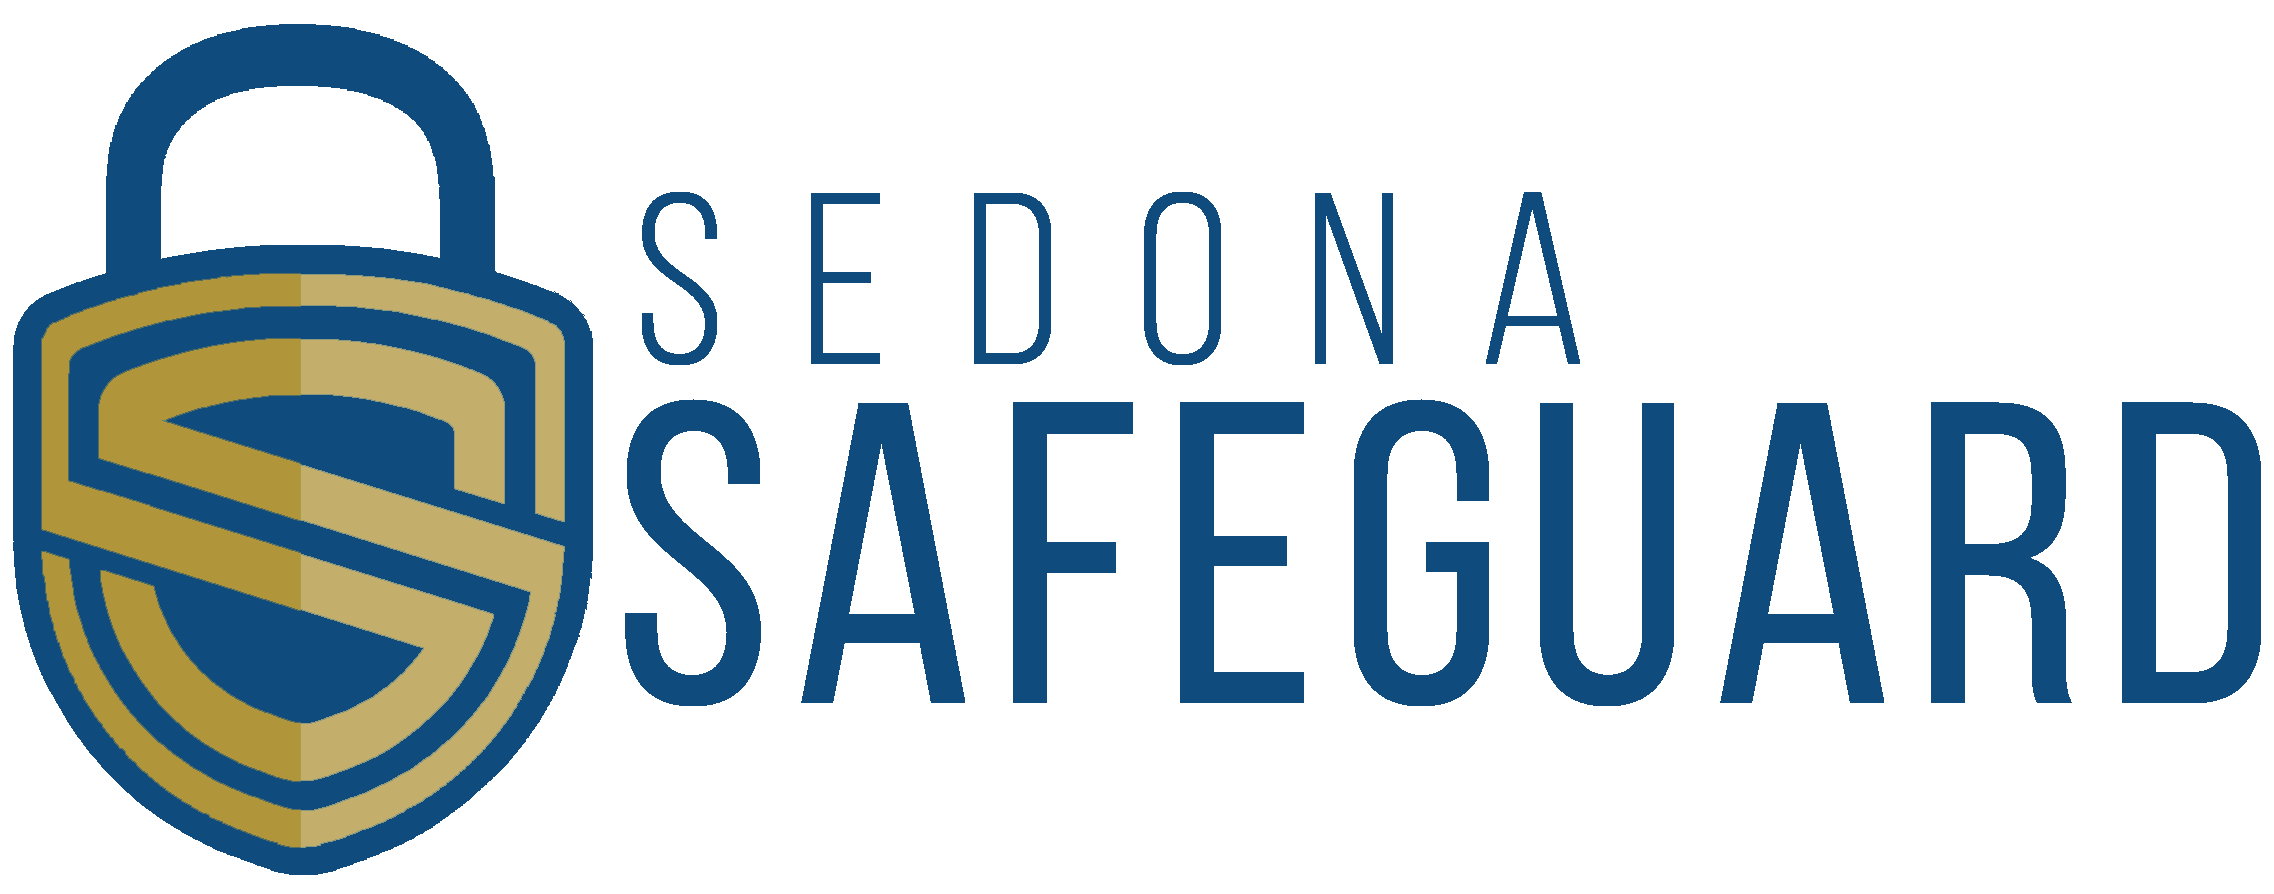 Safeguard Sedona Logo